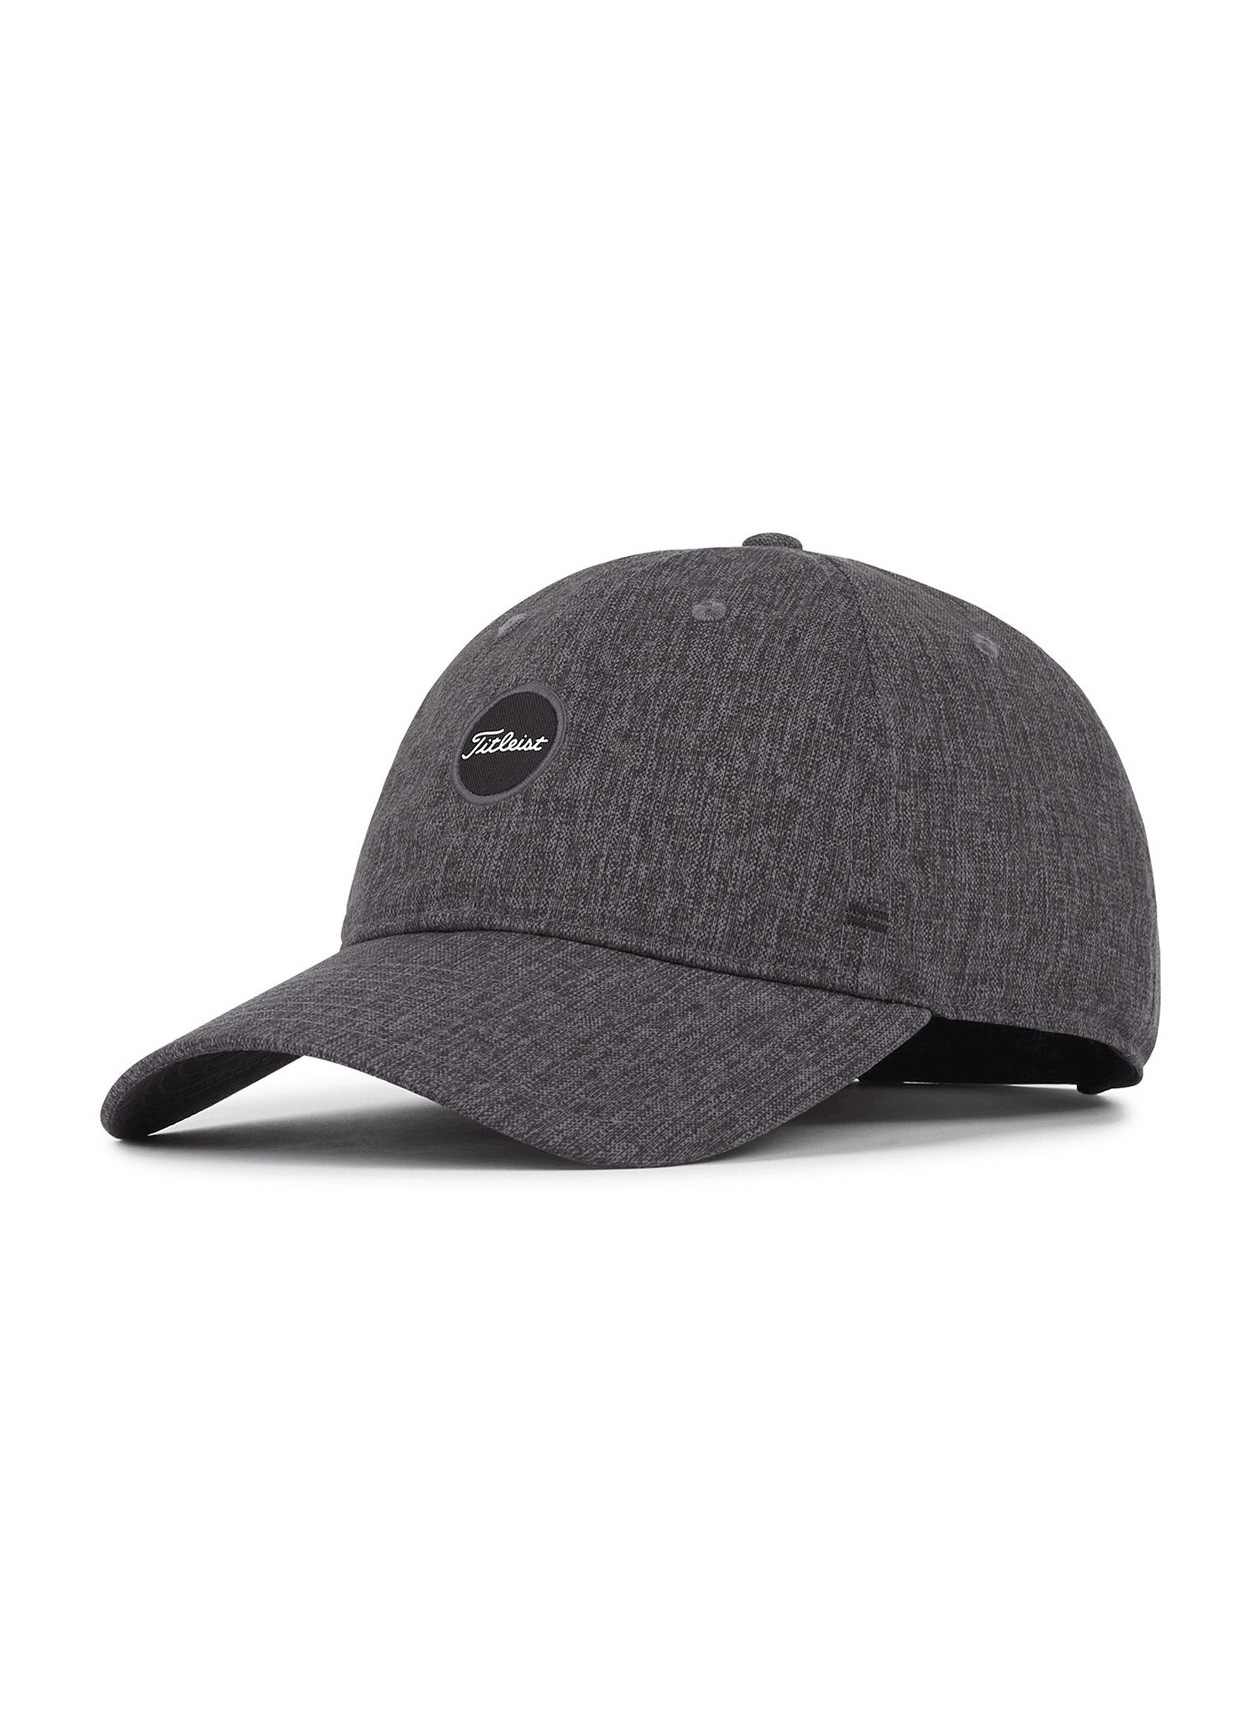 Titleist Heathered Graphite / Black / Charcoal Montauk Breezer Hat